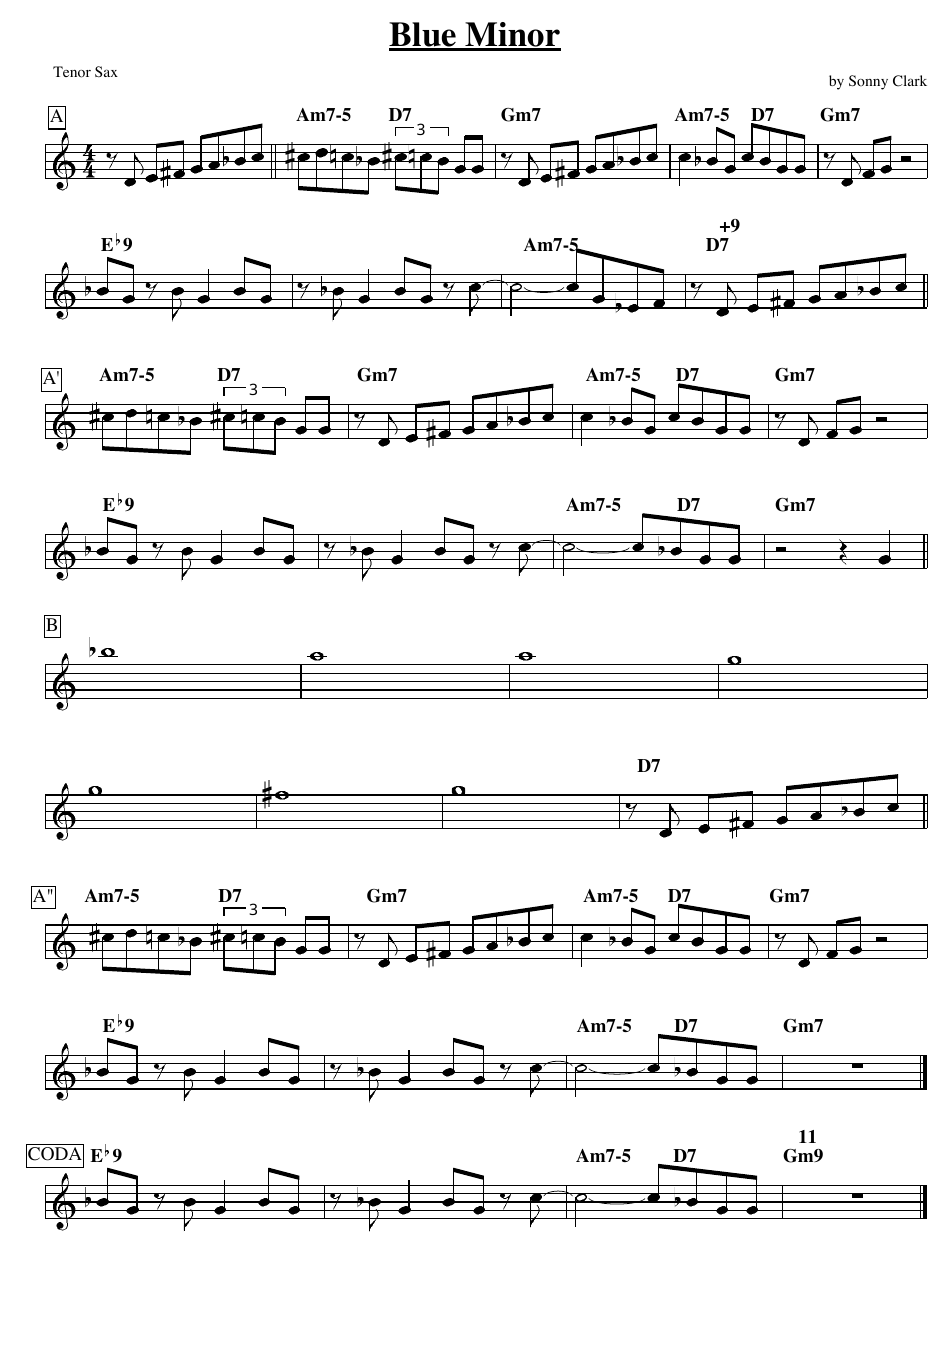 Sonny Clark - Blue Minor Tenor Sax Sheet Music Preview